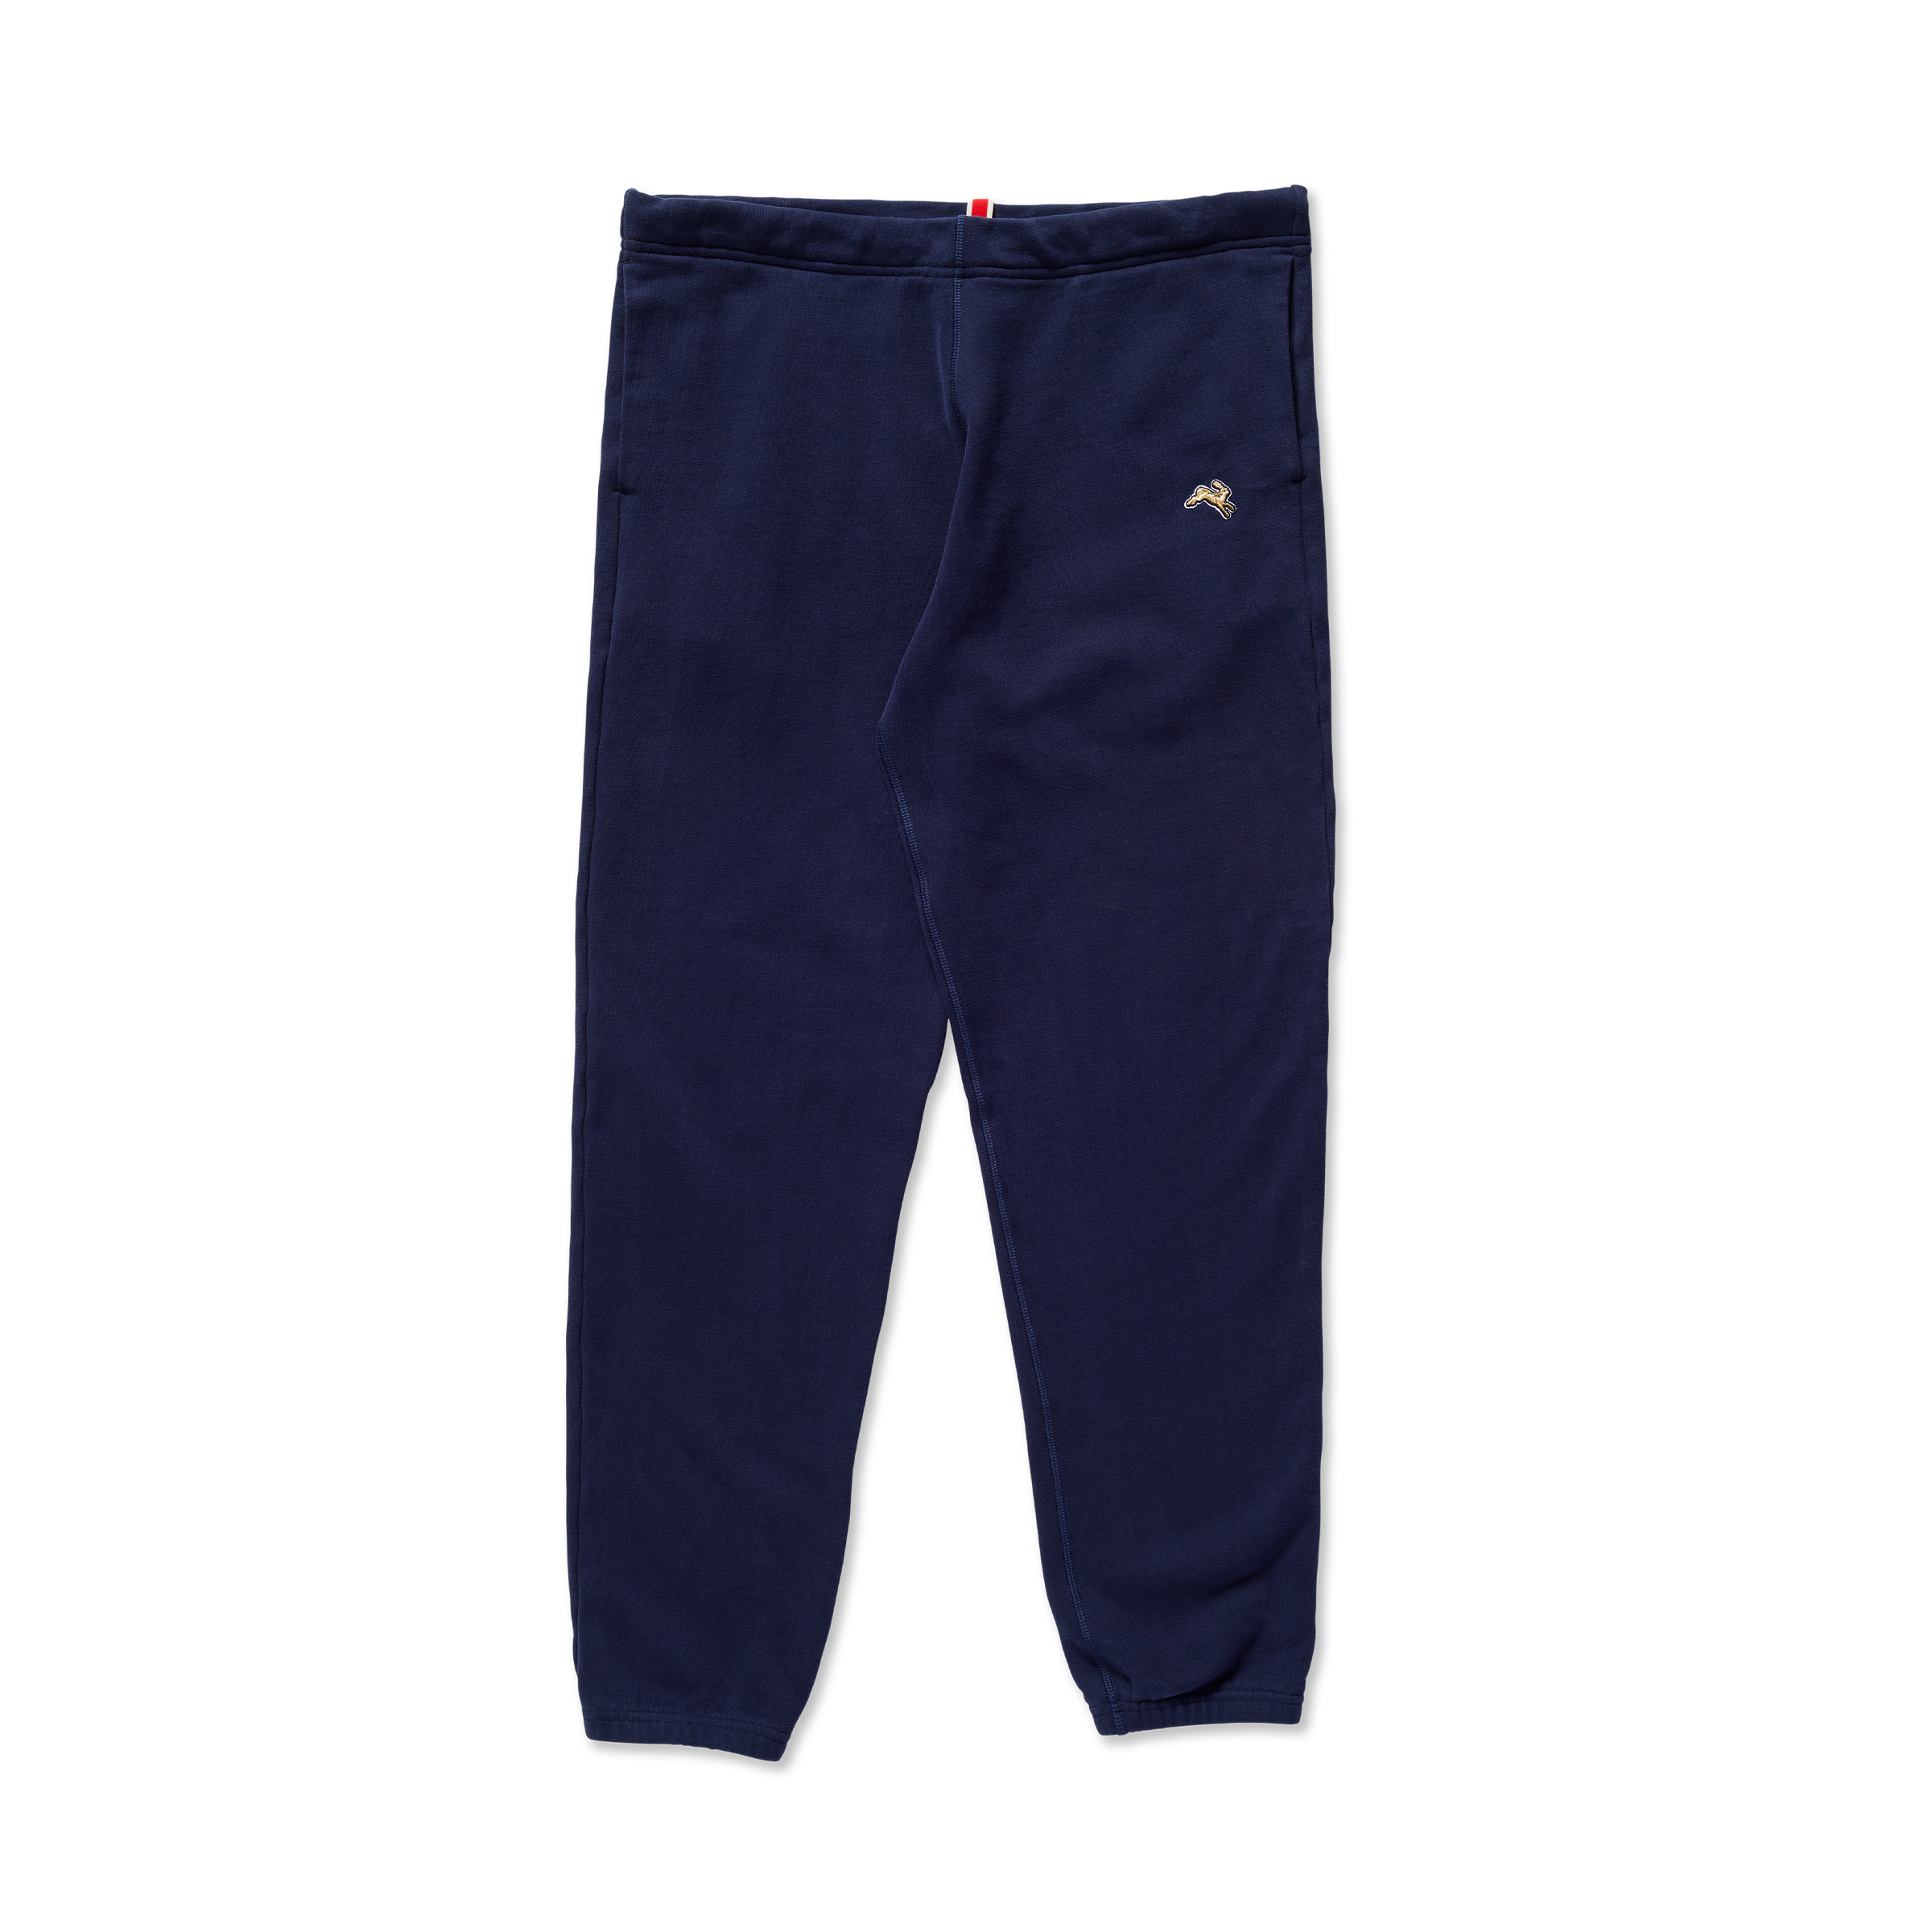 Women's Hollister Sweatpants, size 38 (Blue)